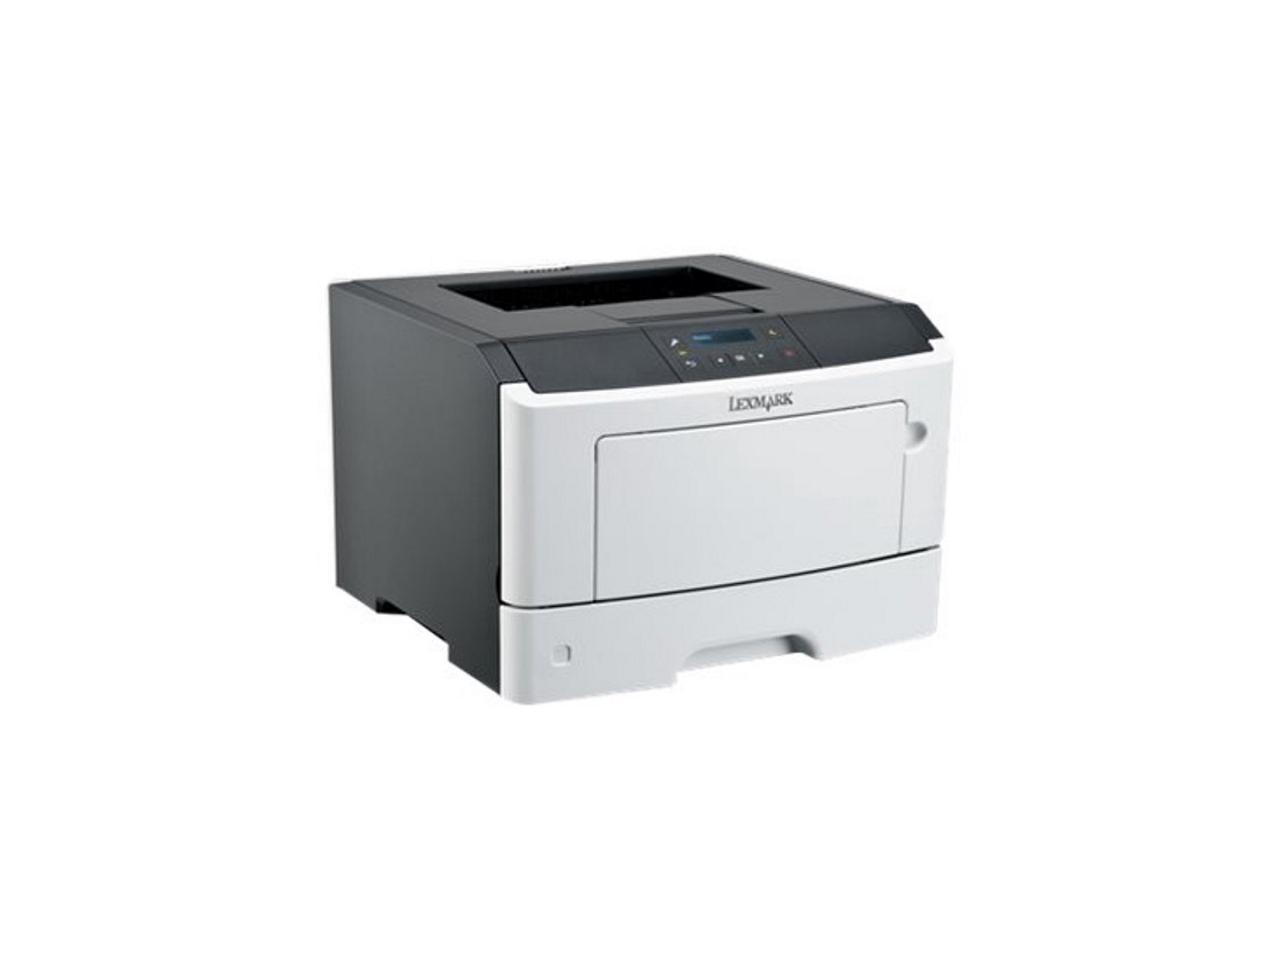 Lexmark MS312dn Monochrome Laser Printer - EU Power - 35S4378 349.99